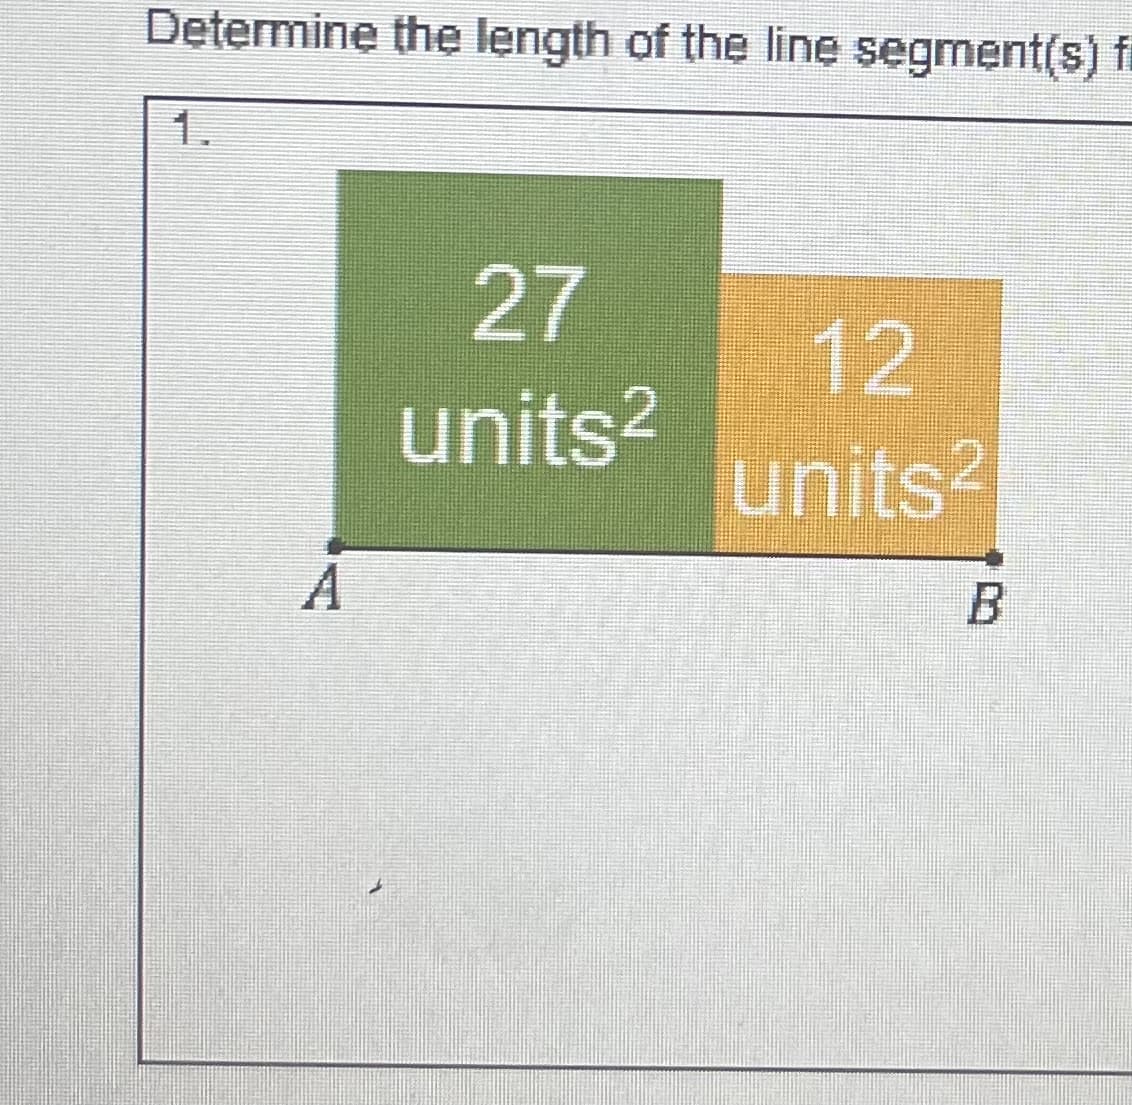 Determine the length of the line segment(s) fi
A
27
units²
12
units²
B